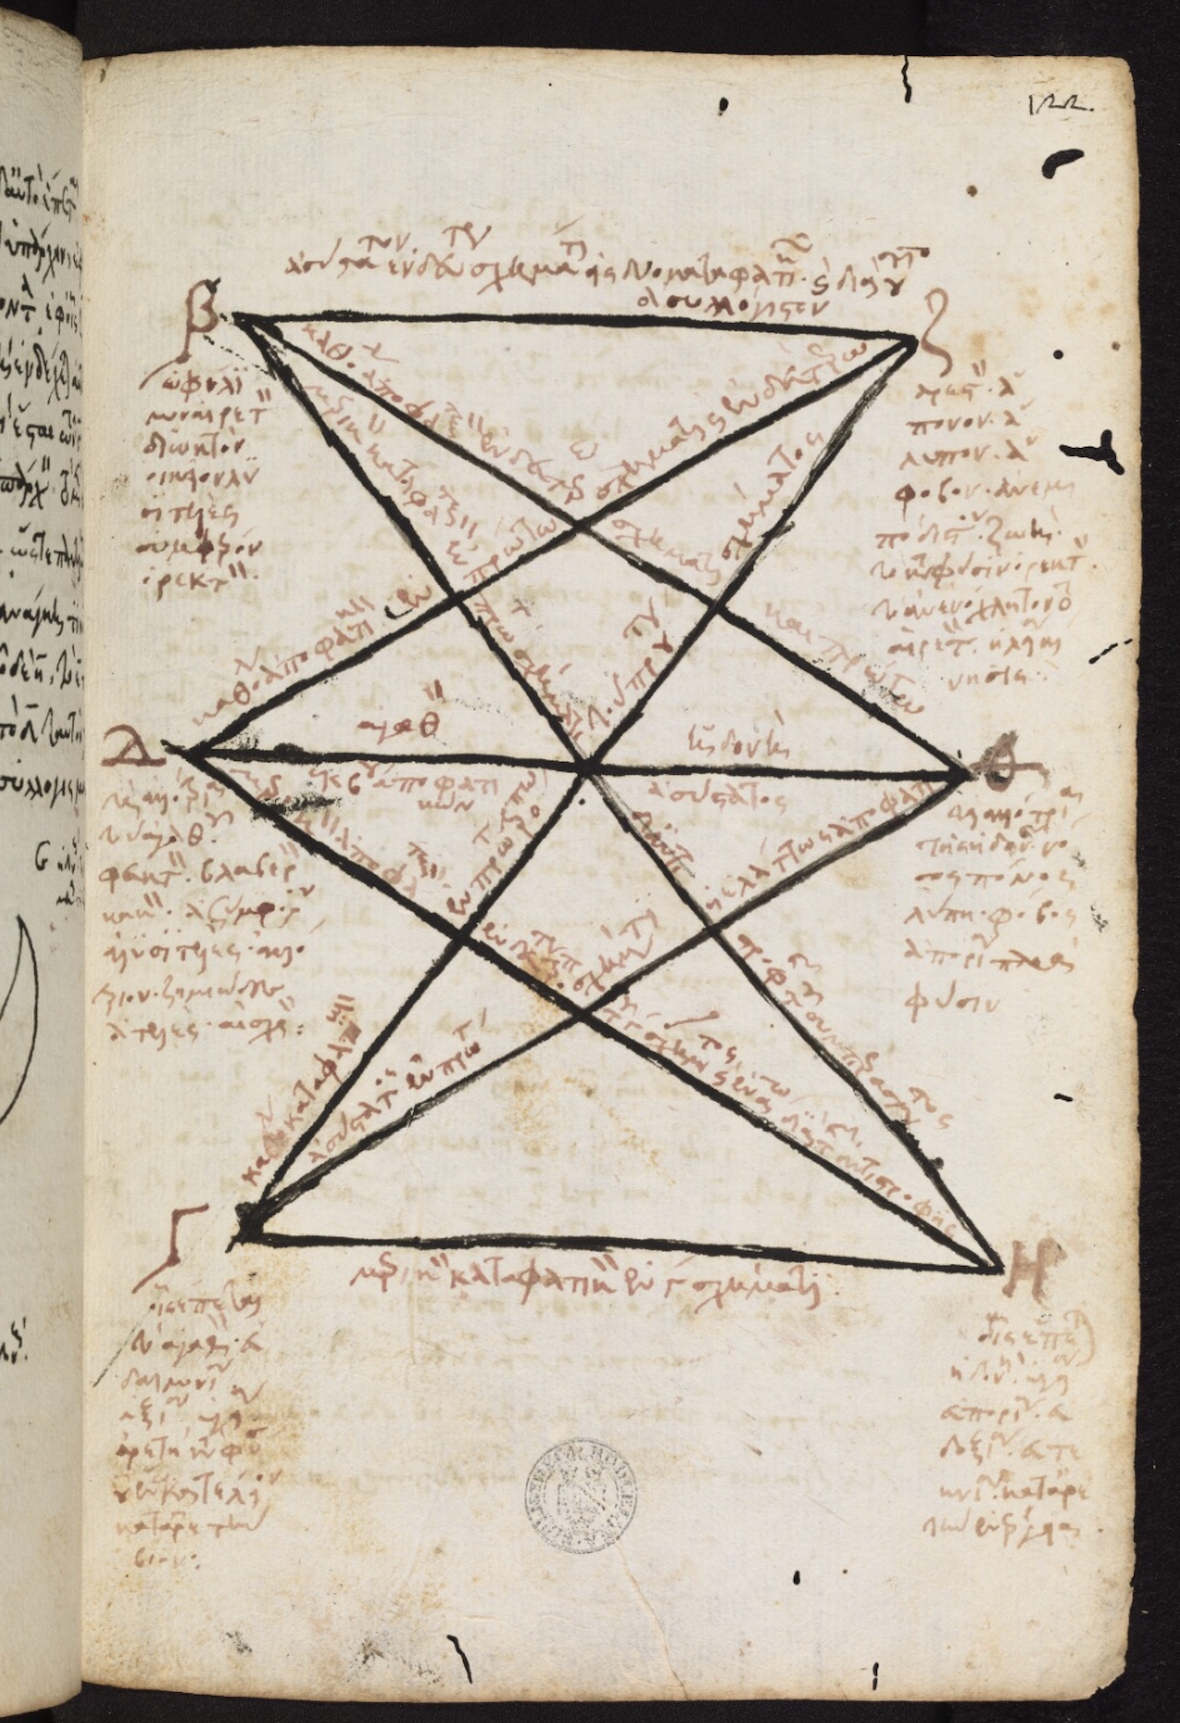 Oxon. Barocci. gr. 87, fol. 122r, 15th century (source: Bodleian Library,Oxford)